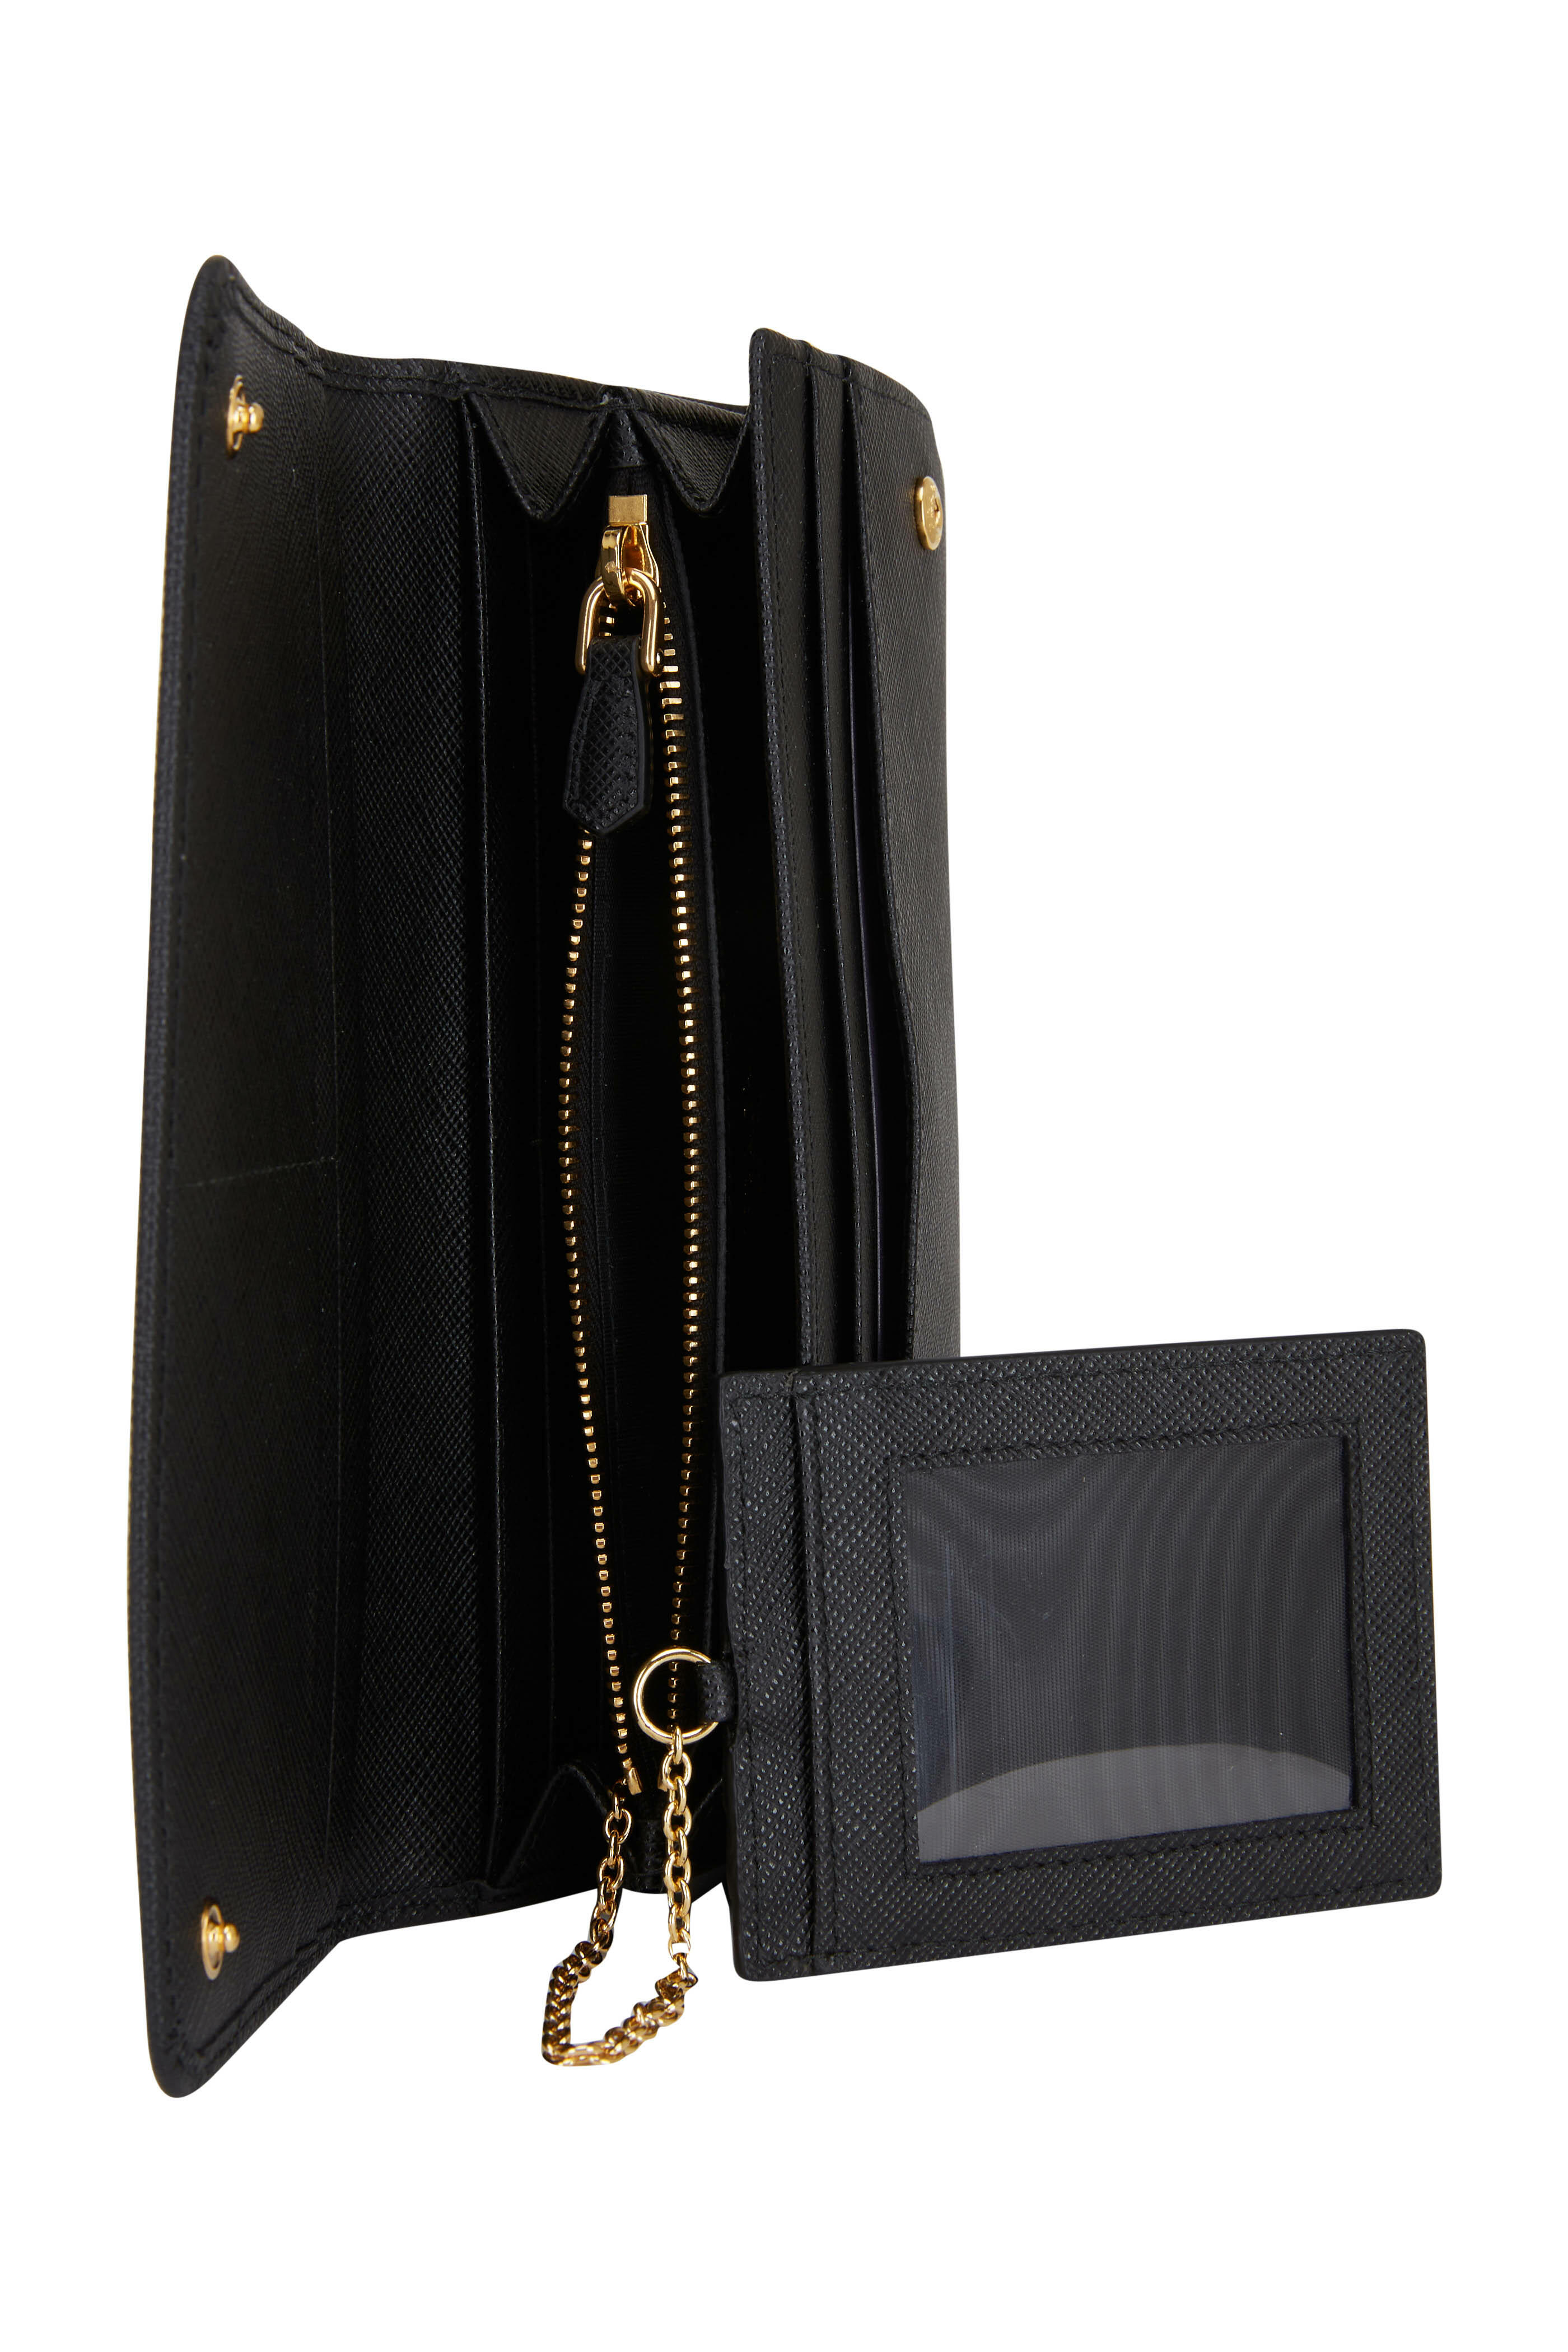 Prada Saffiano Black Wallet on Chain